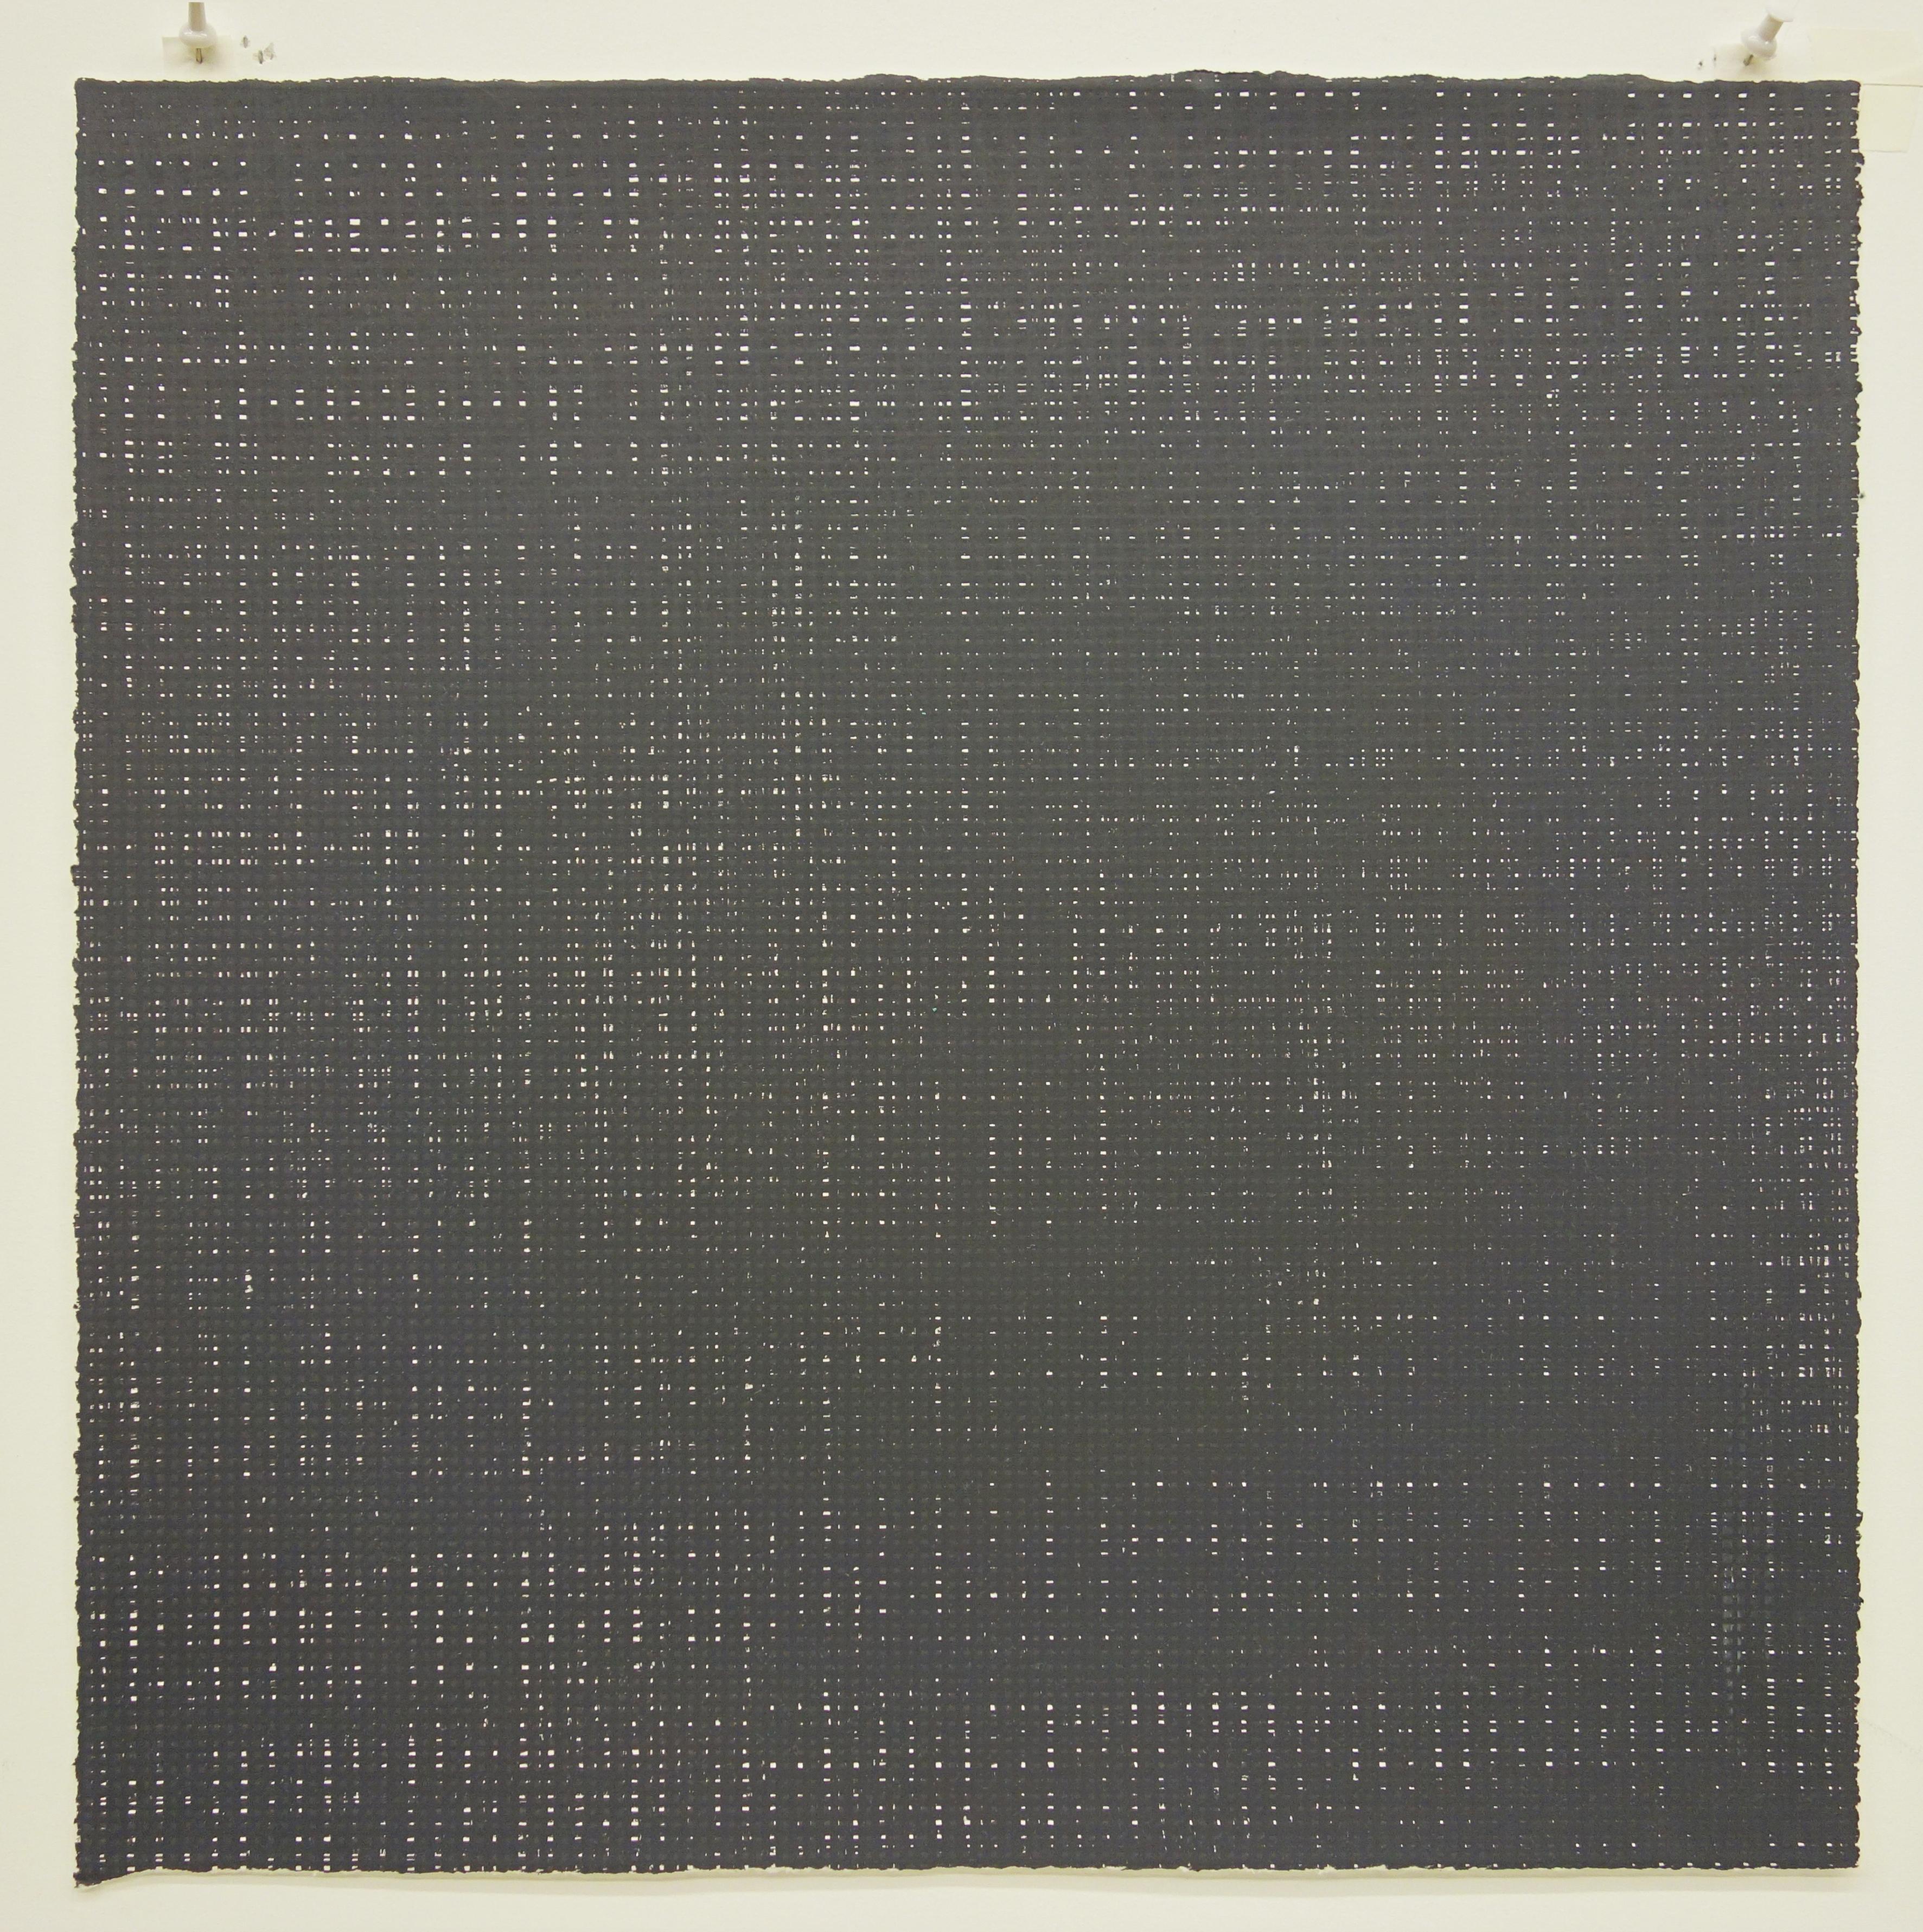 Rob de Oude, Untitled-Wassaic 2, 2016, silkscreen, 18 x 18 inches, Suite of 10 8